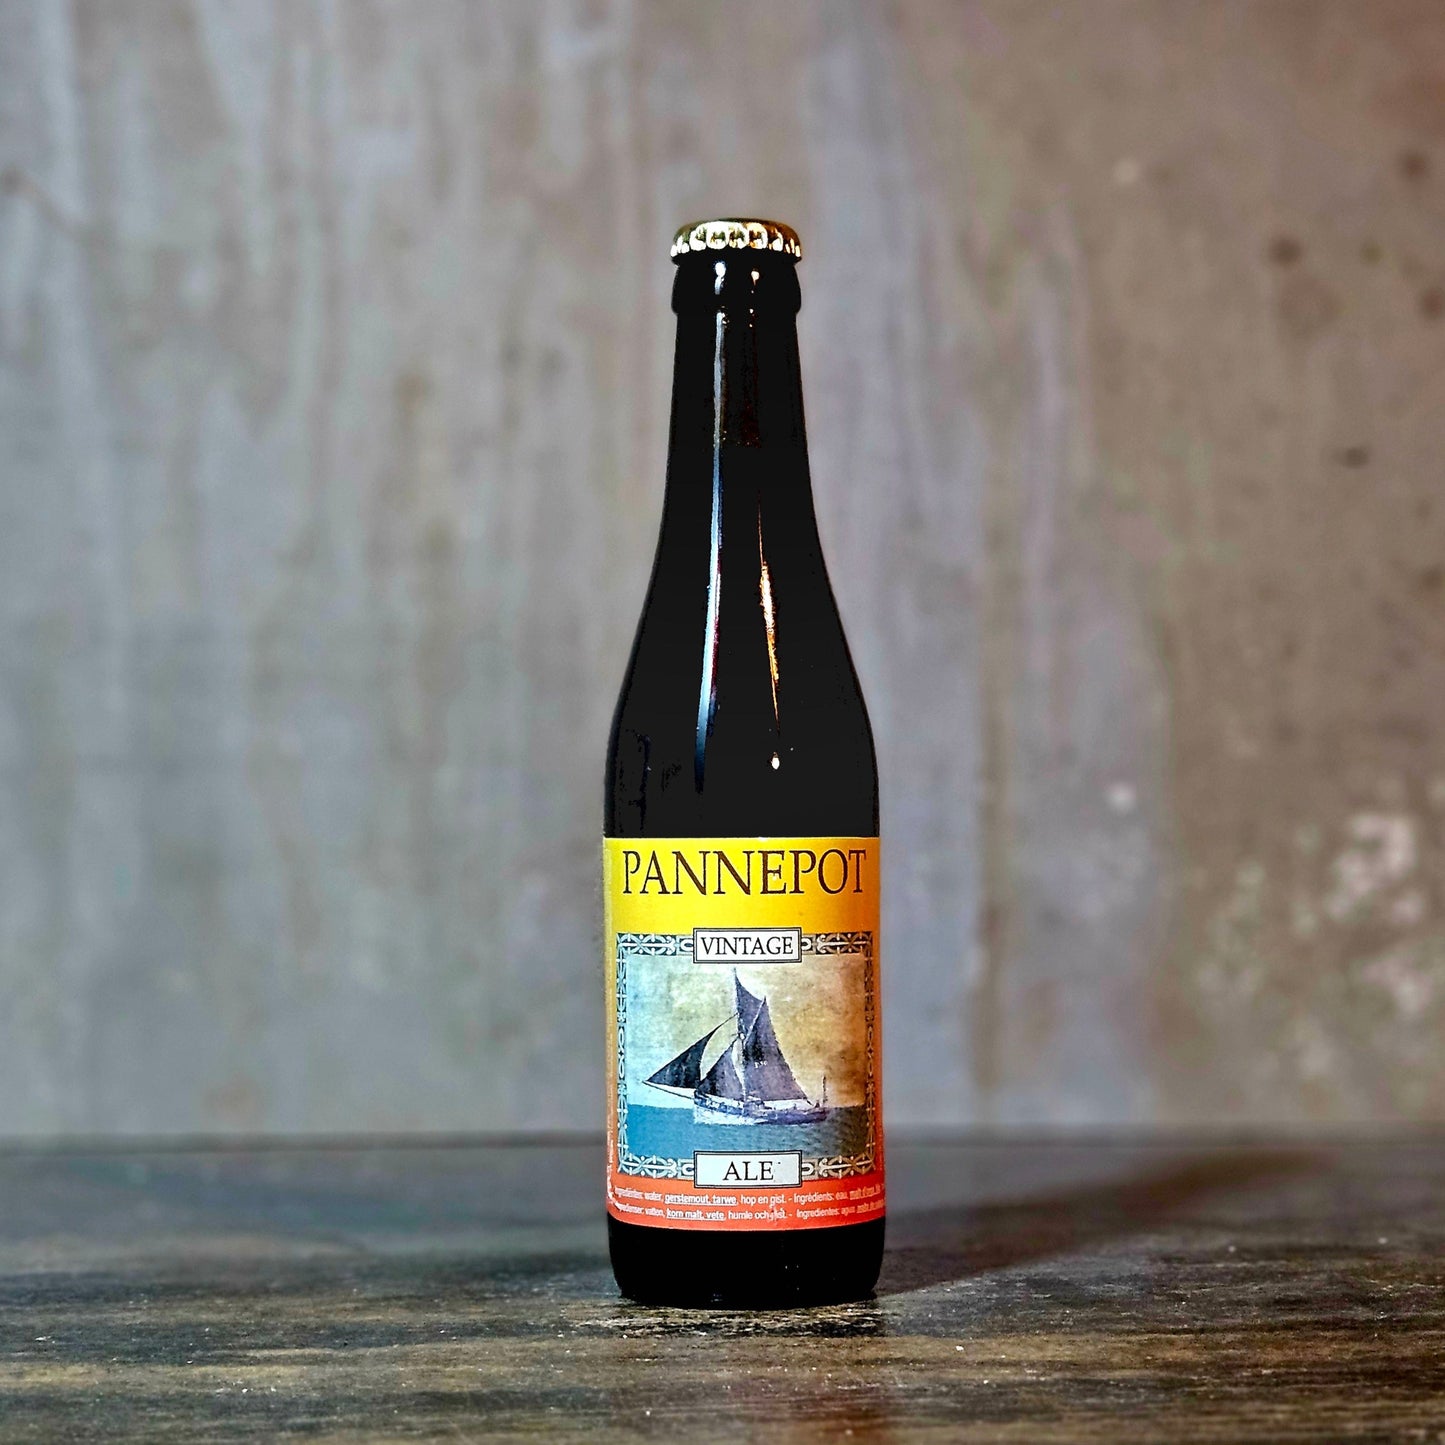 De Struise "Pannepot" Belgian Dark Strong Ale